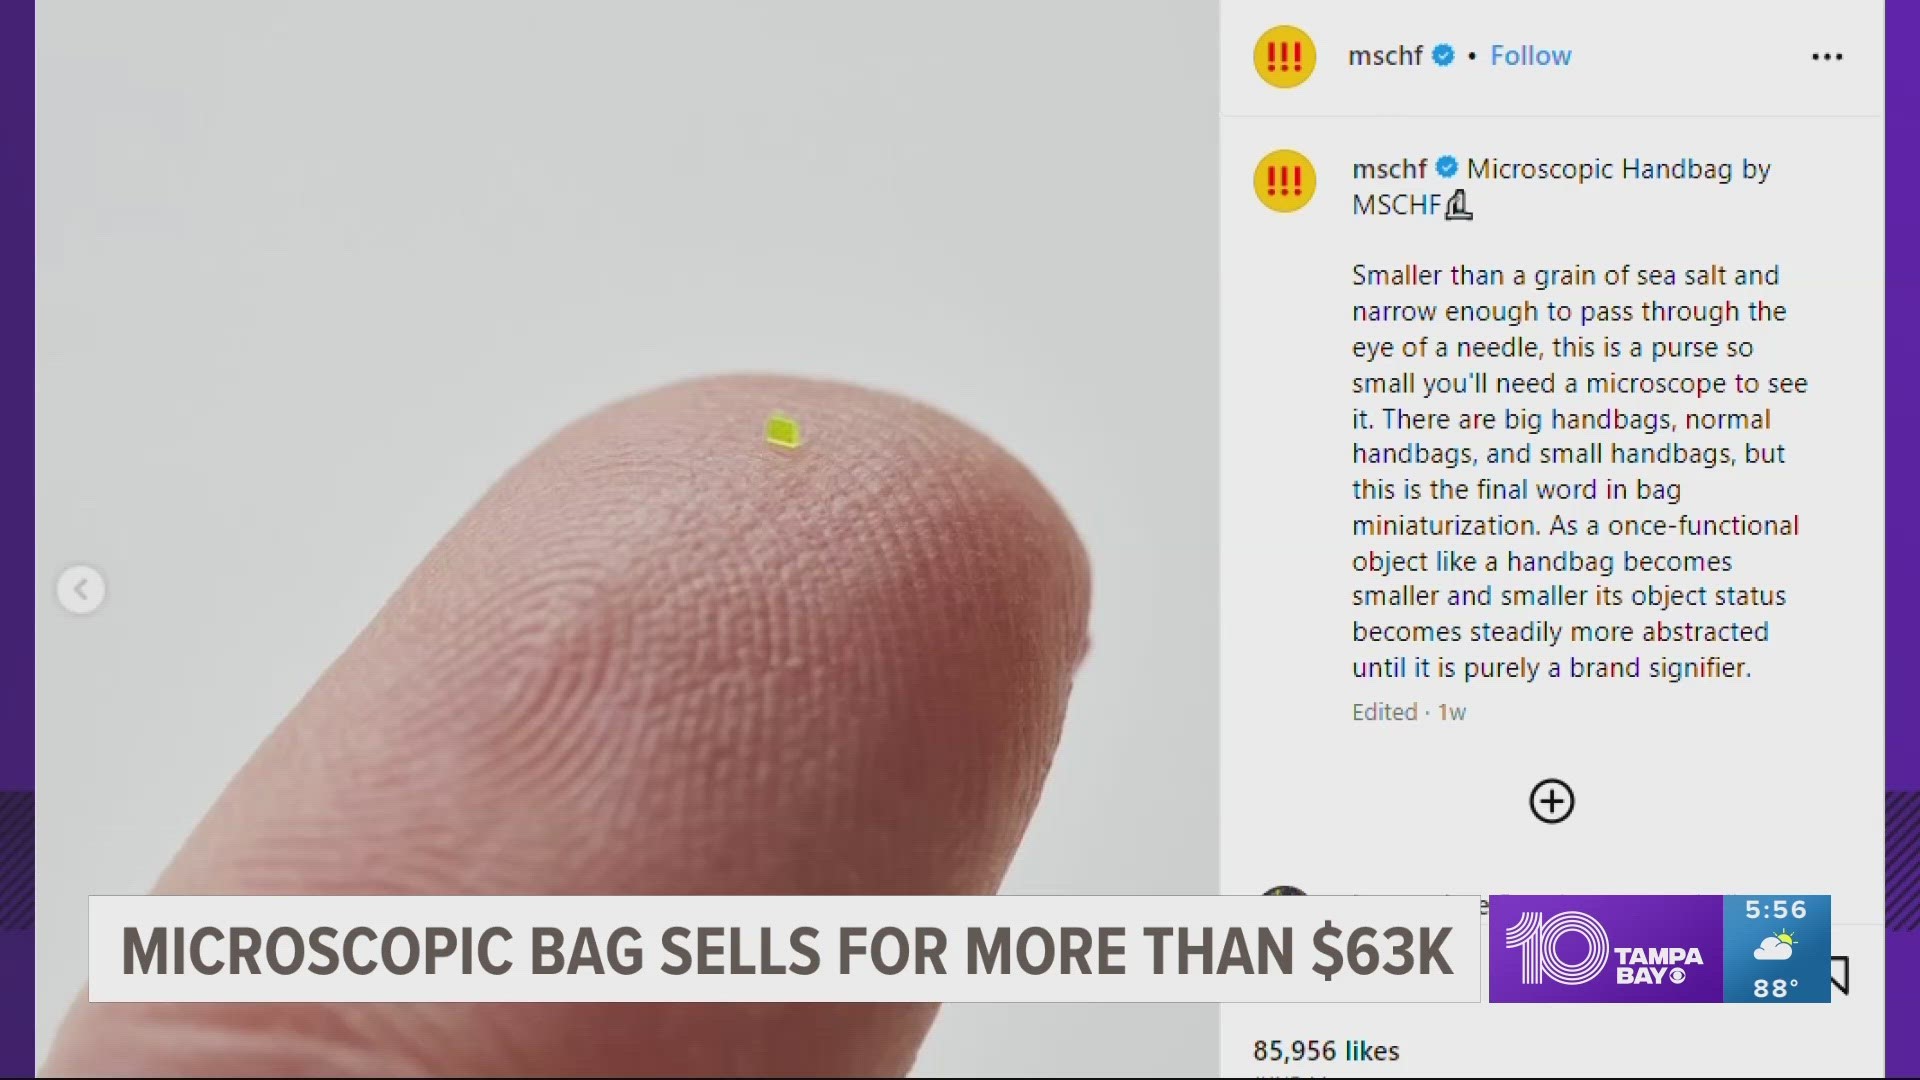 Would You Buy This Microscopic Handbag?